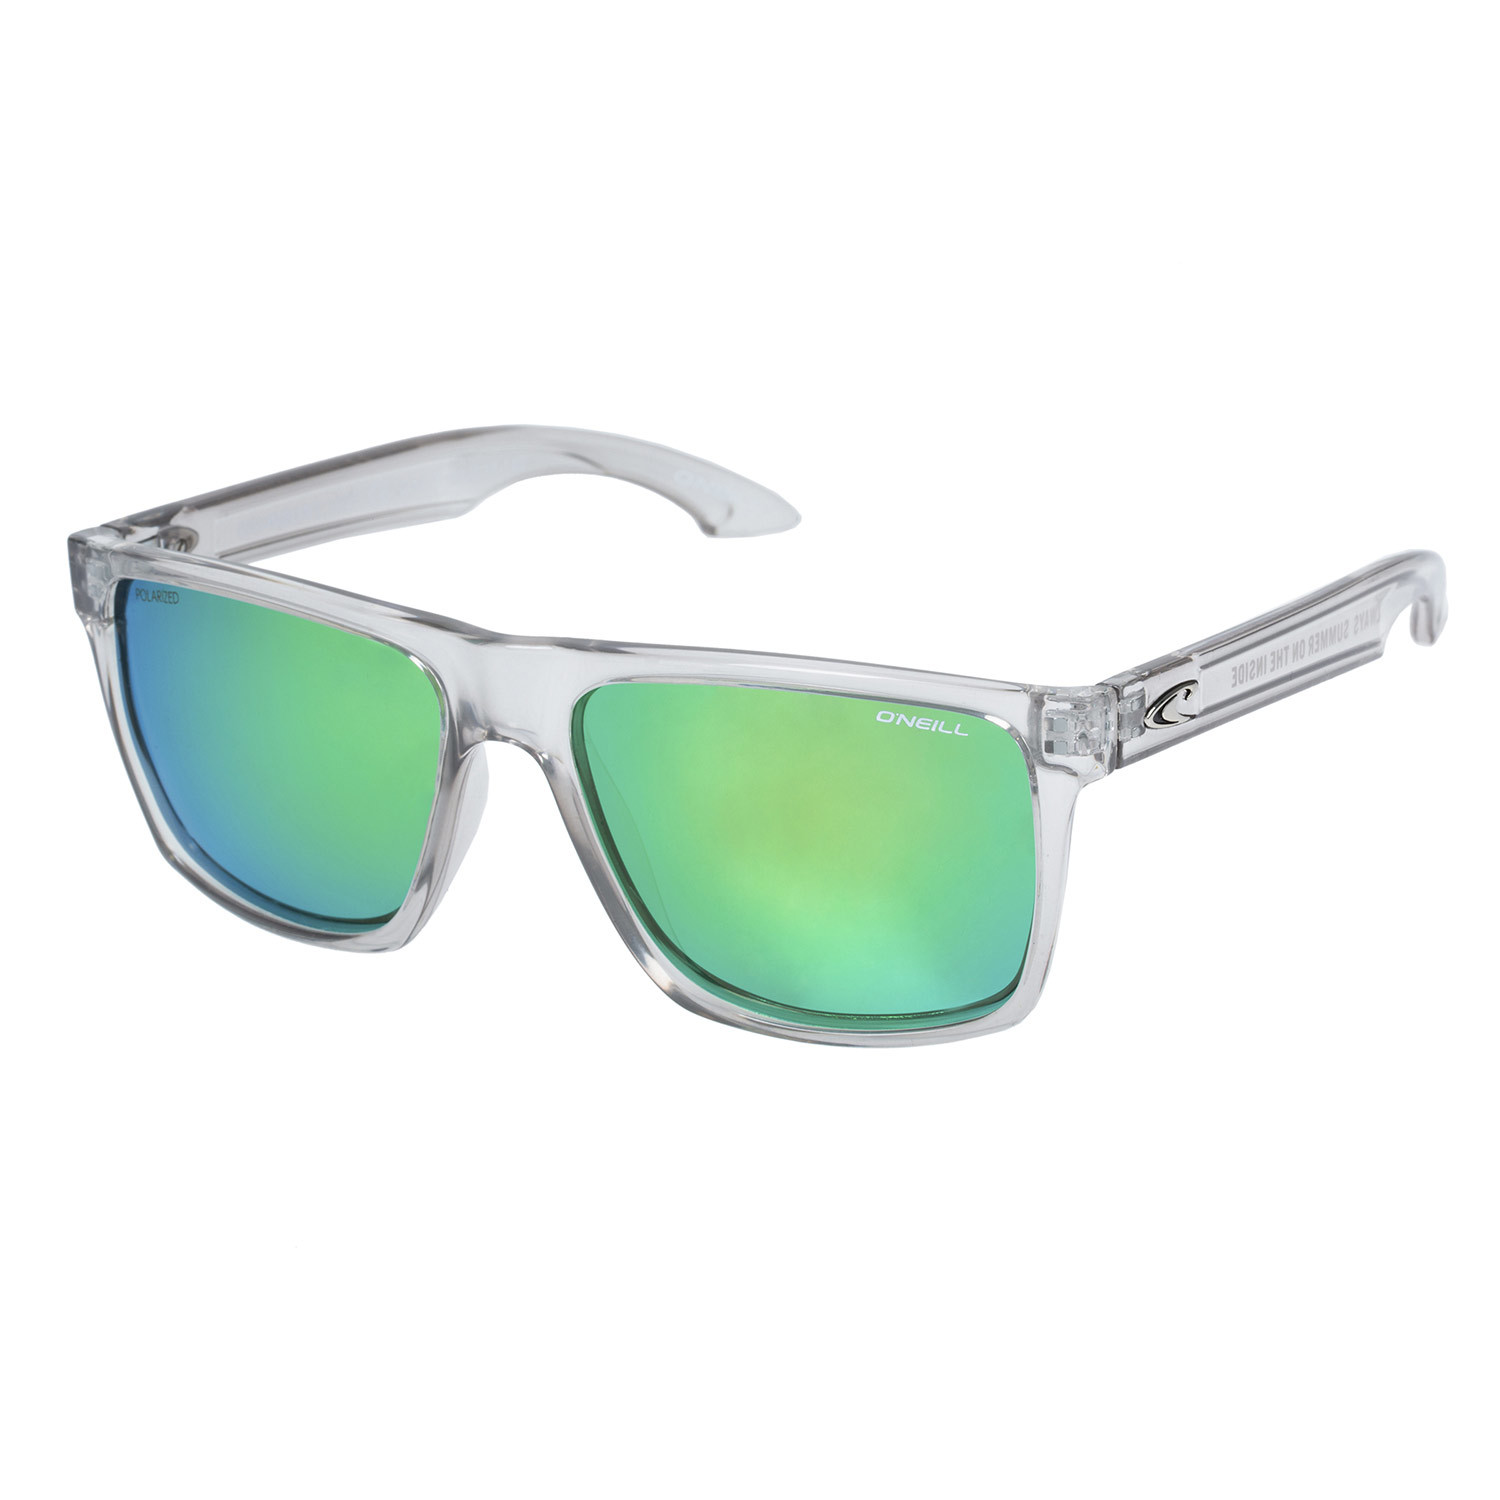 Boys fashion Sunglasses CTS9074 White & Green Frame 100% UV Protection 